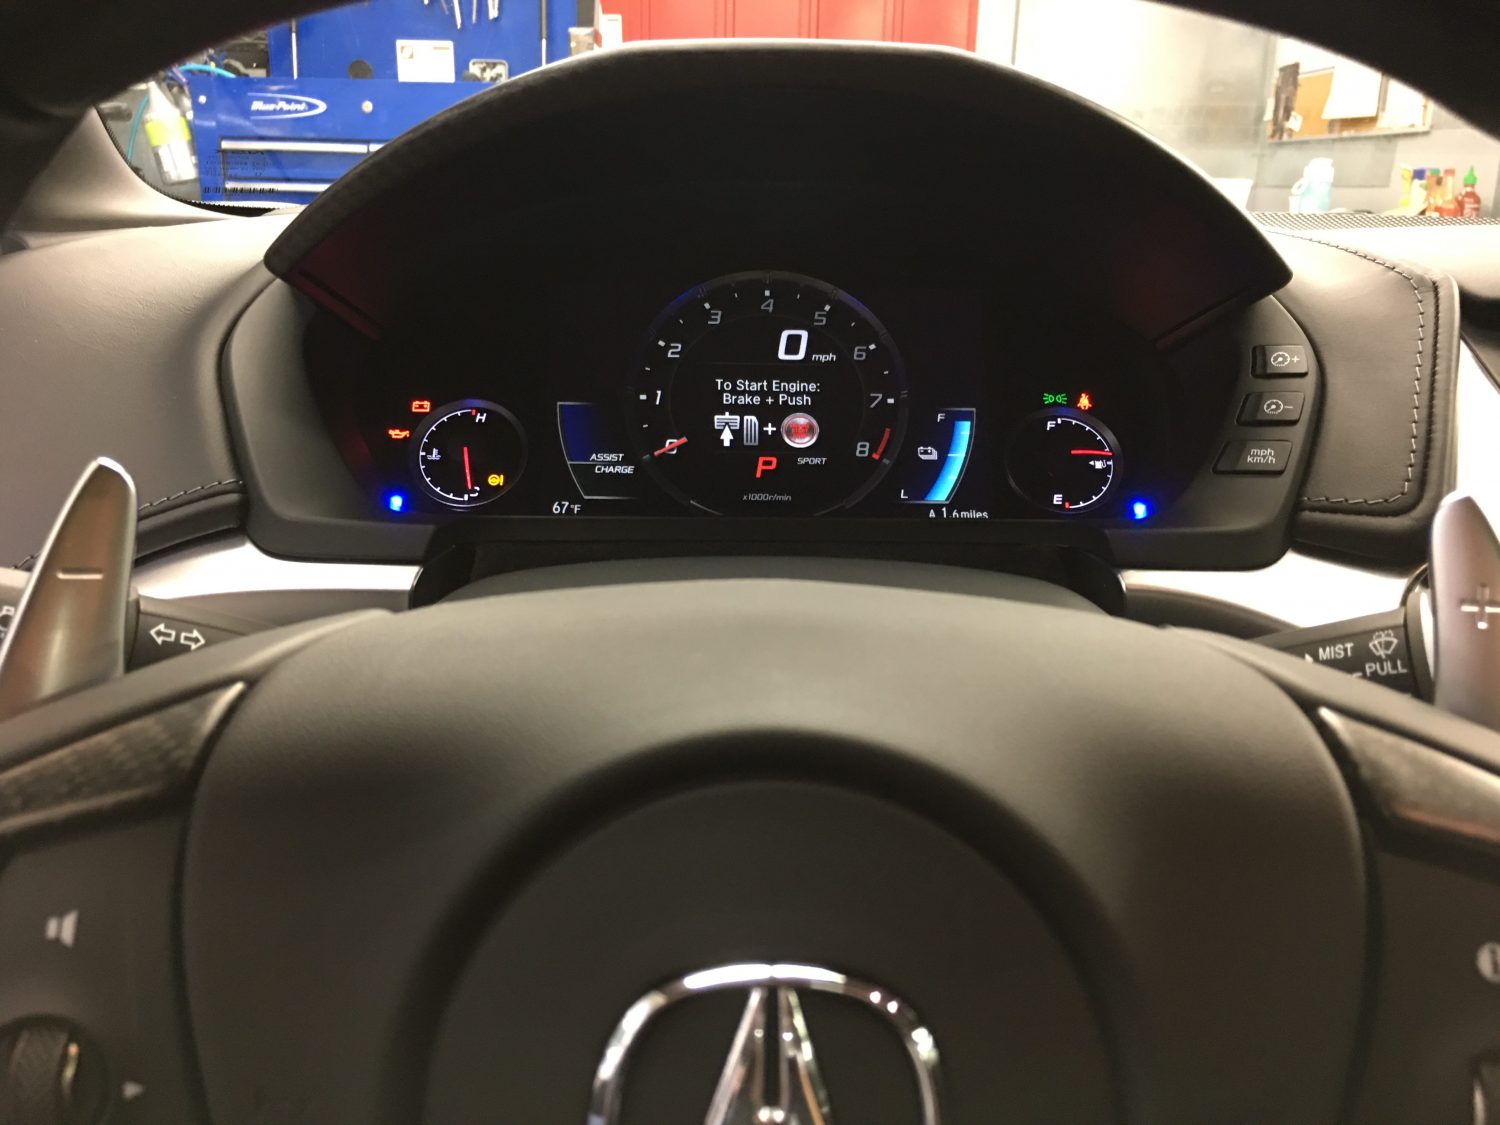 k40 radar detector blue alert leds on a 2017 Acura NSX